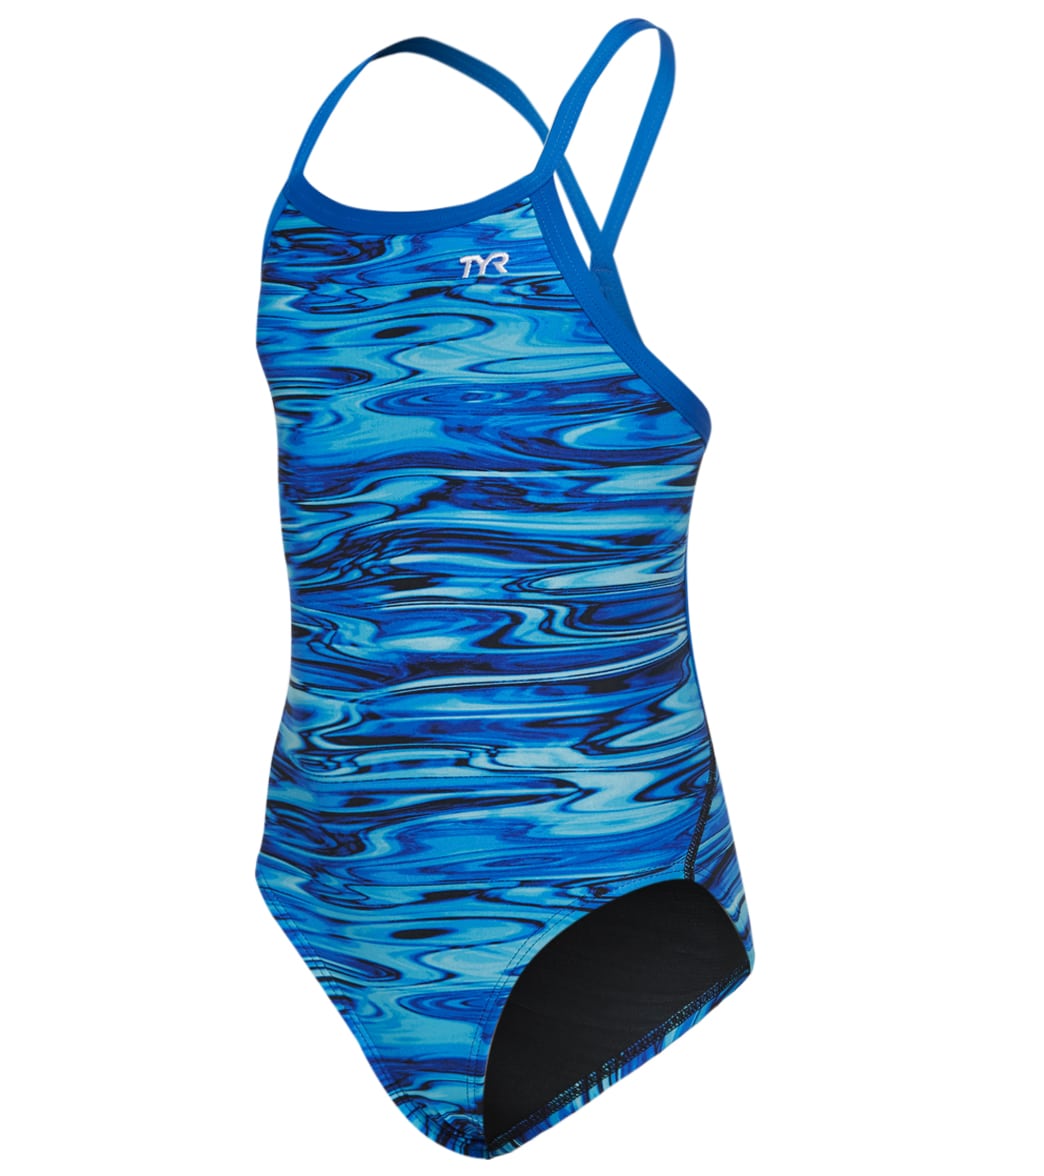 TYR Girls' Hydra Diamondfit One Piece Swimsuit - Blue 22 - Swimoutlet.com